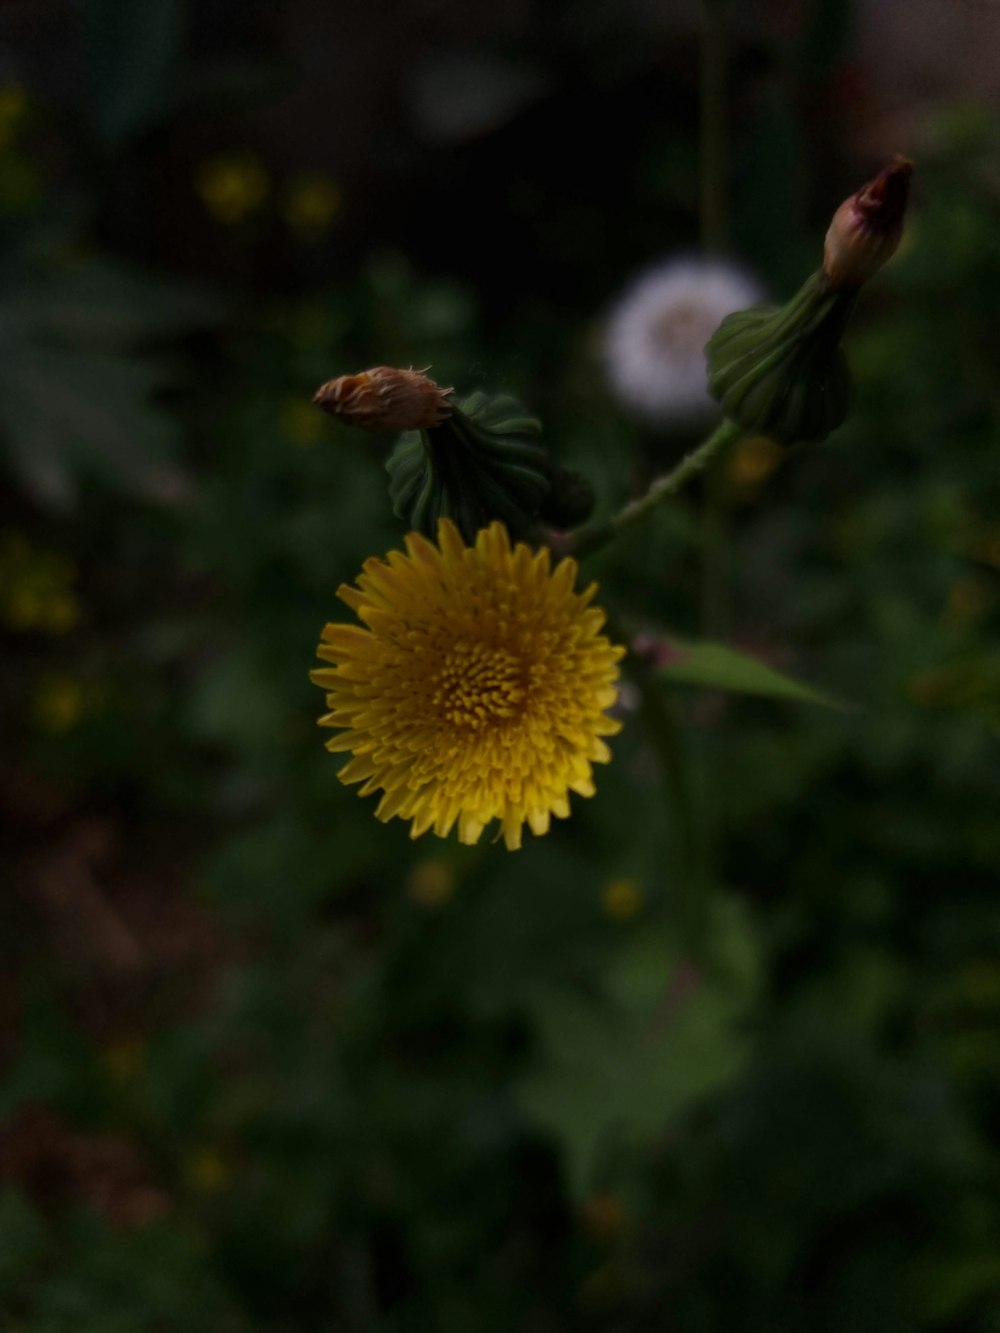 a single dandelion flower in the middle of a field